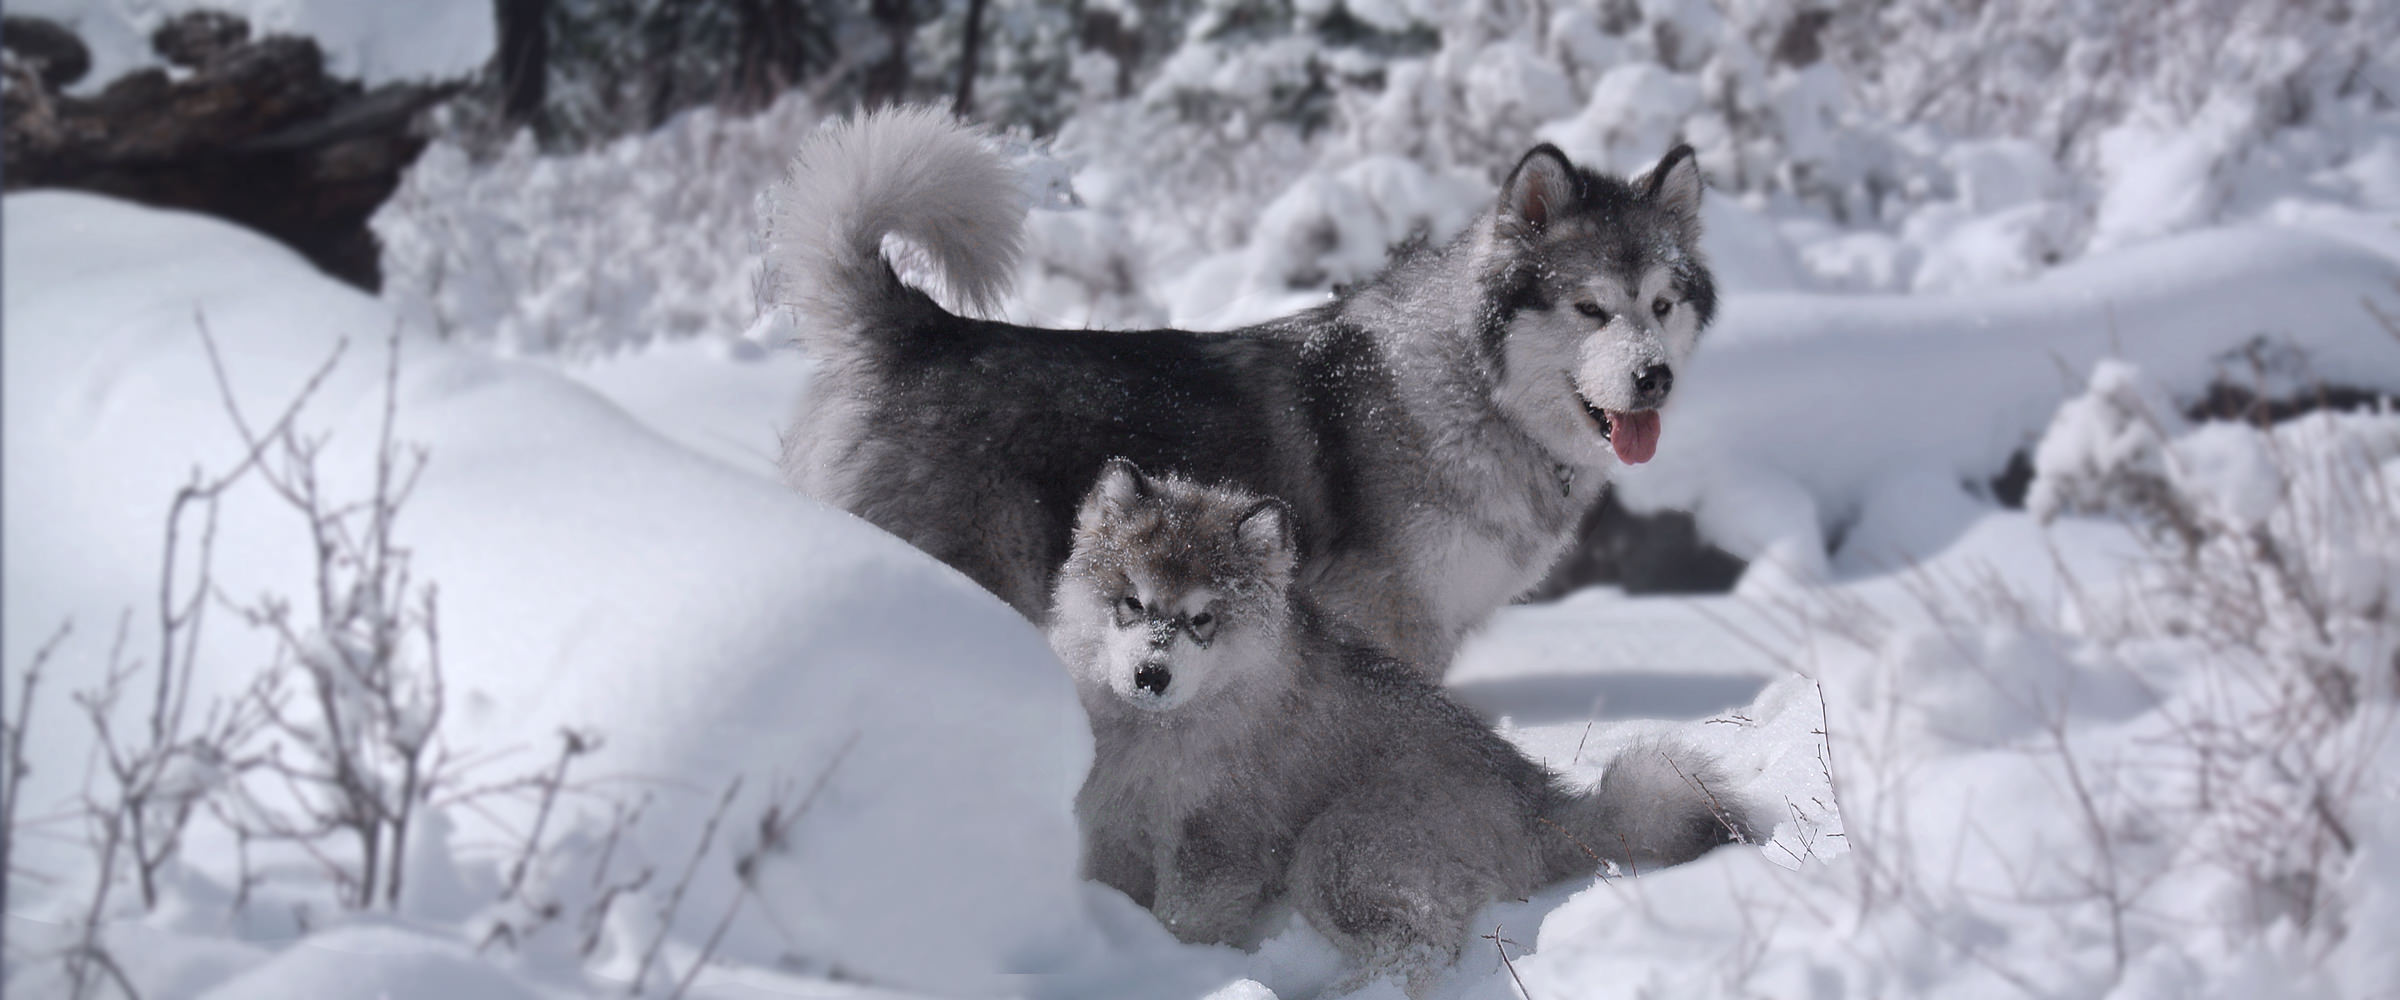 Snowlion Alaskan Malamutes Beautiful California Malamute Puppies Available Now Top Malamute Breeders